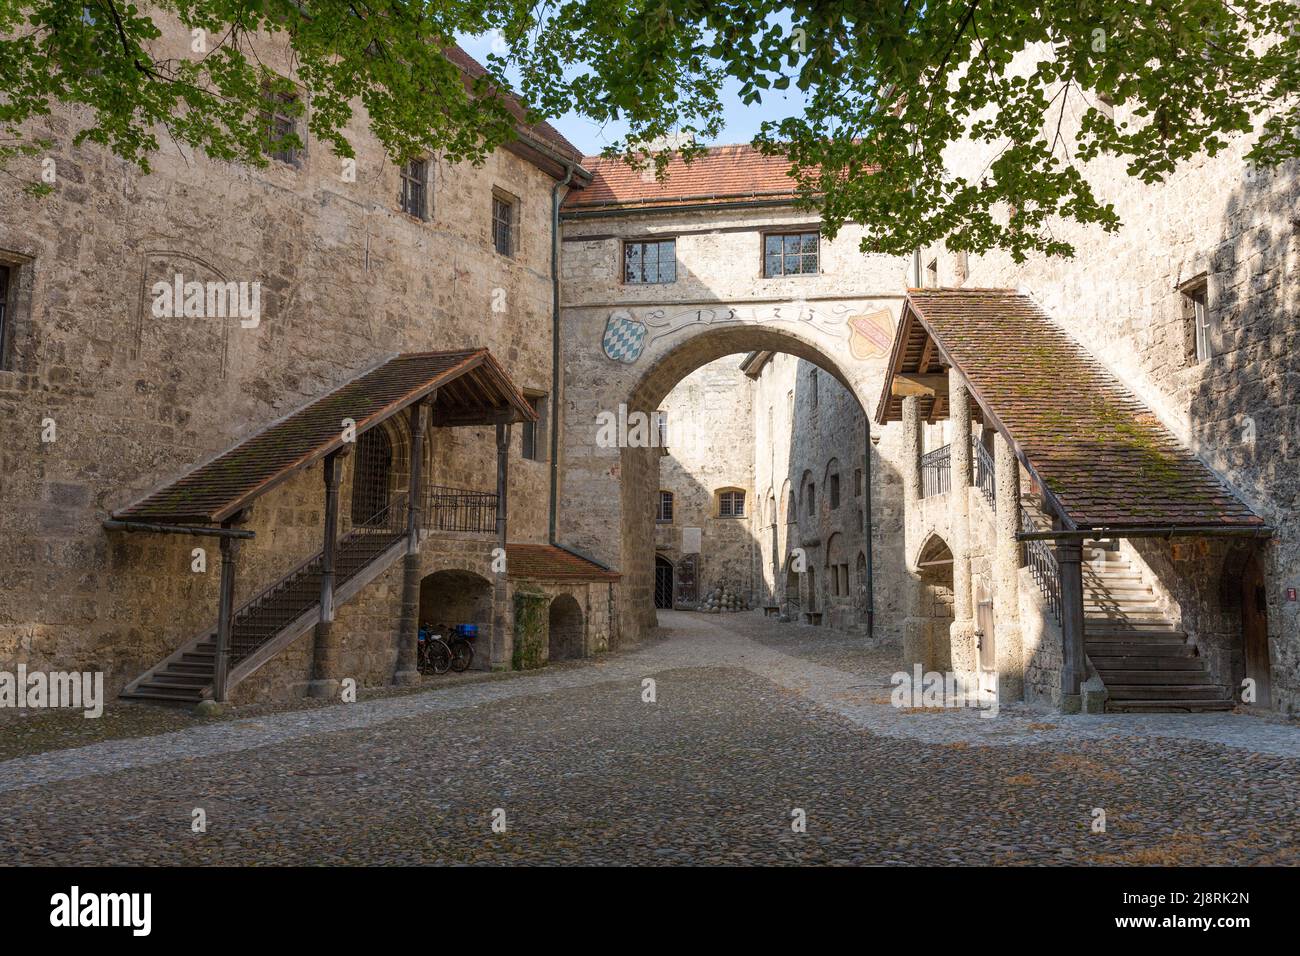 Burghausen, Germany - Jul 25, 2021: View of the inner courtyard of the main castle of Burghausen castle. Stock Photo